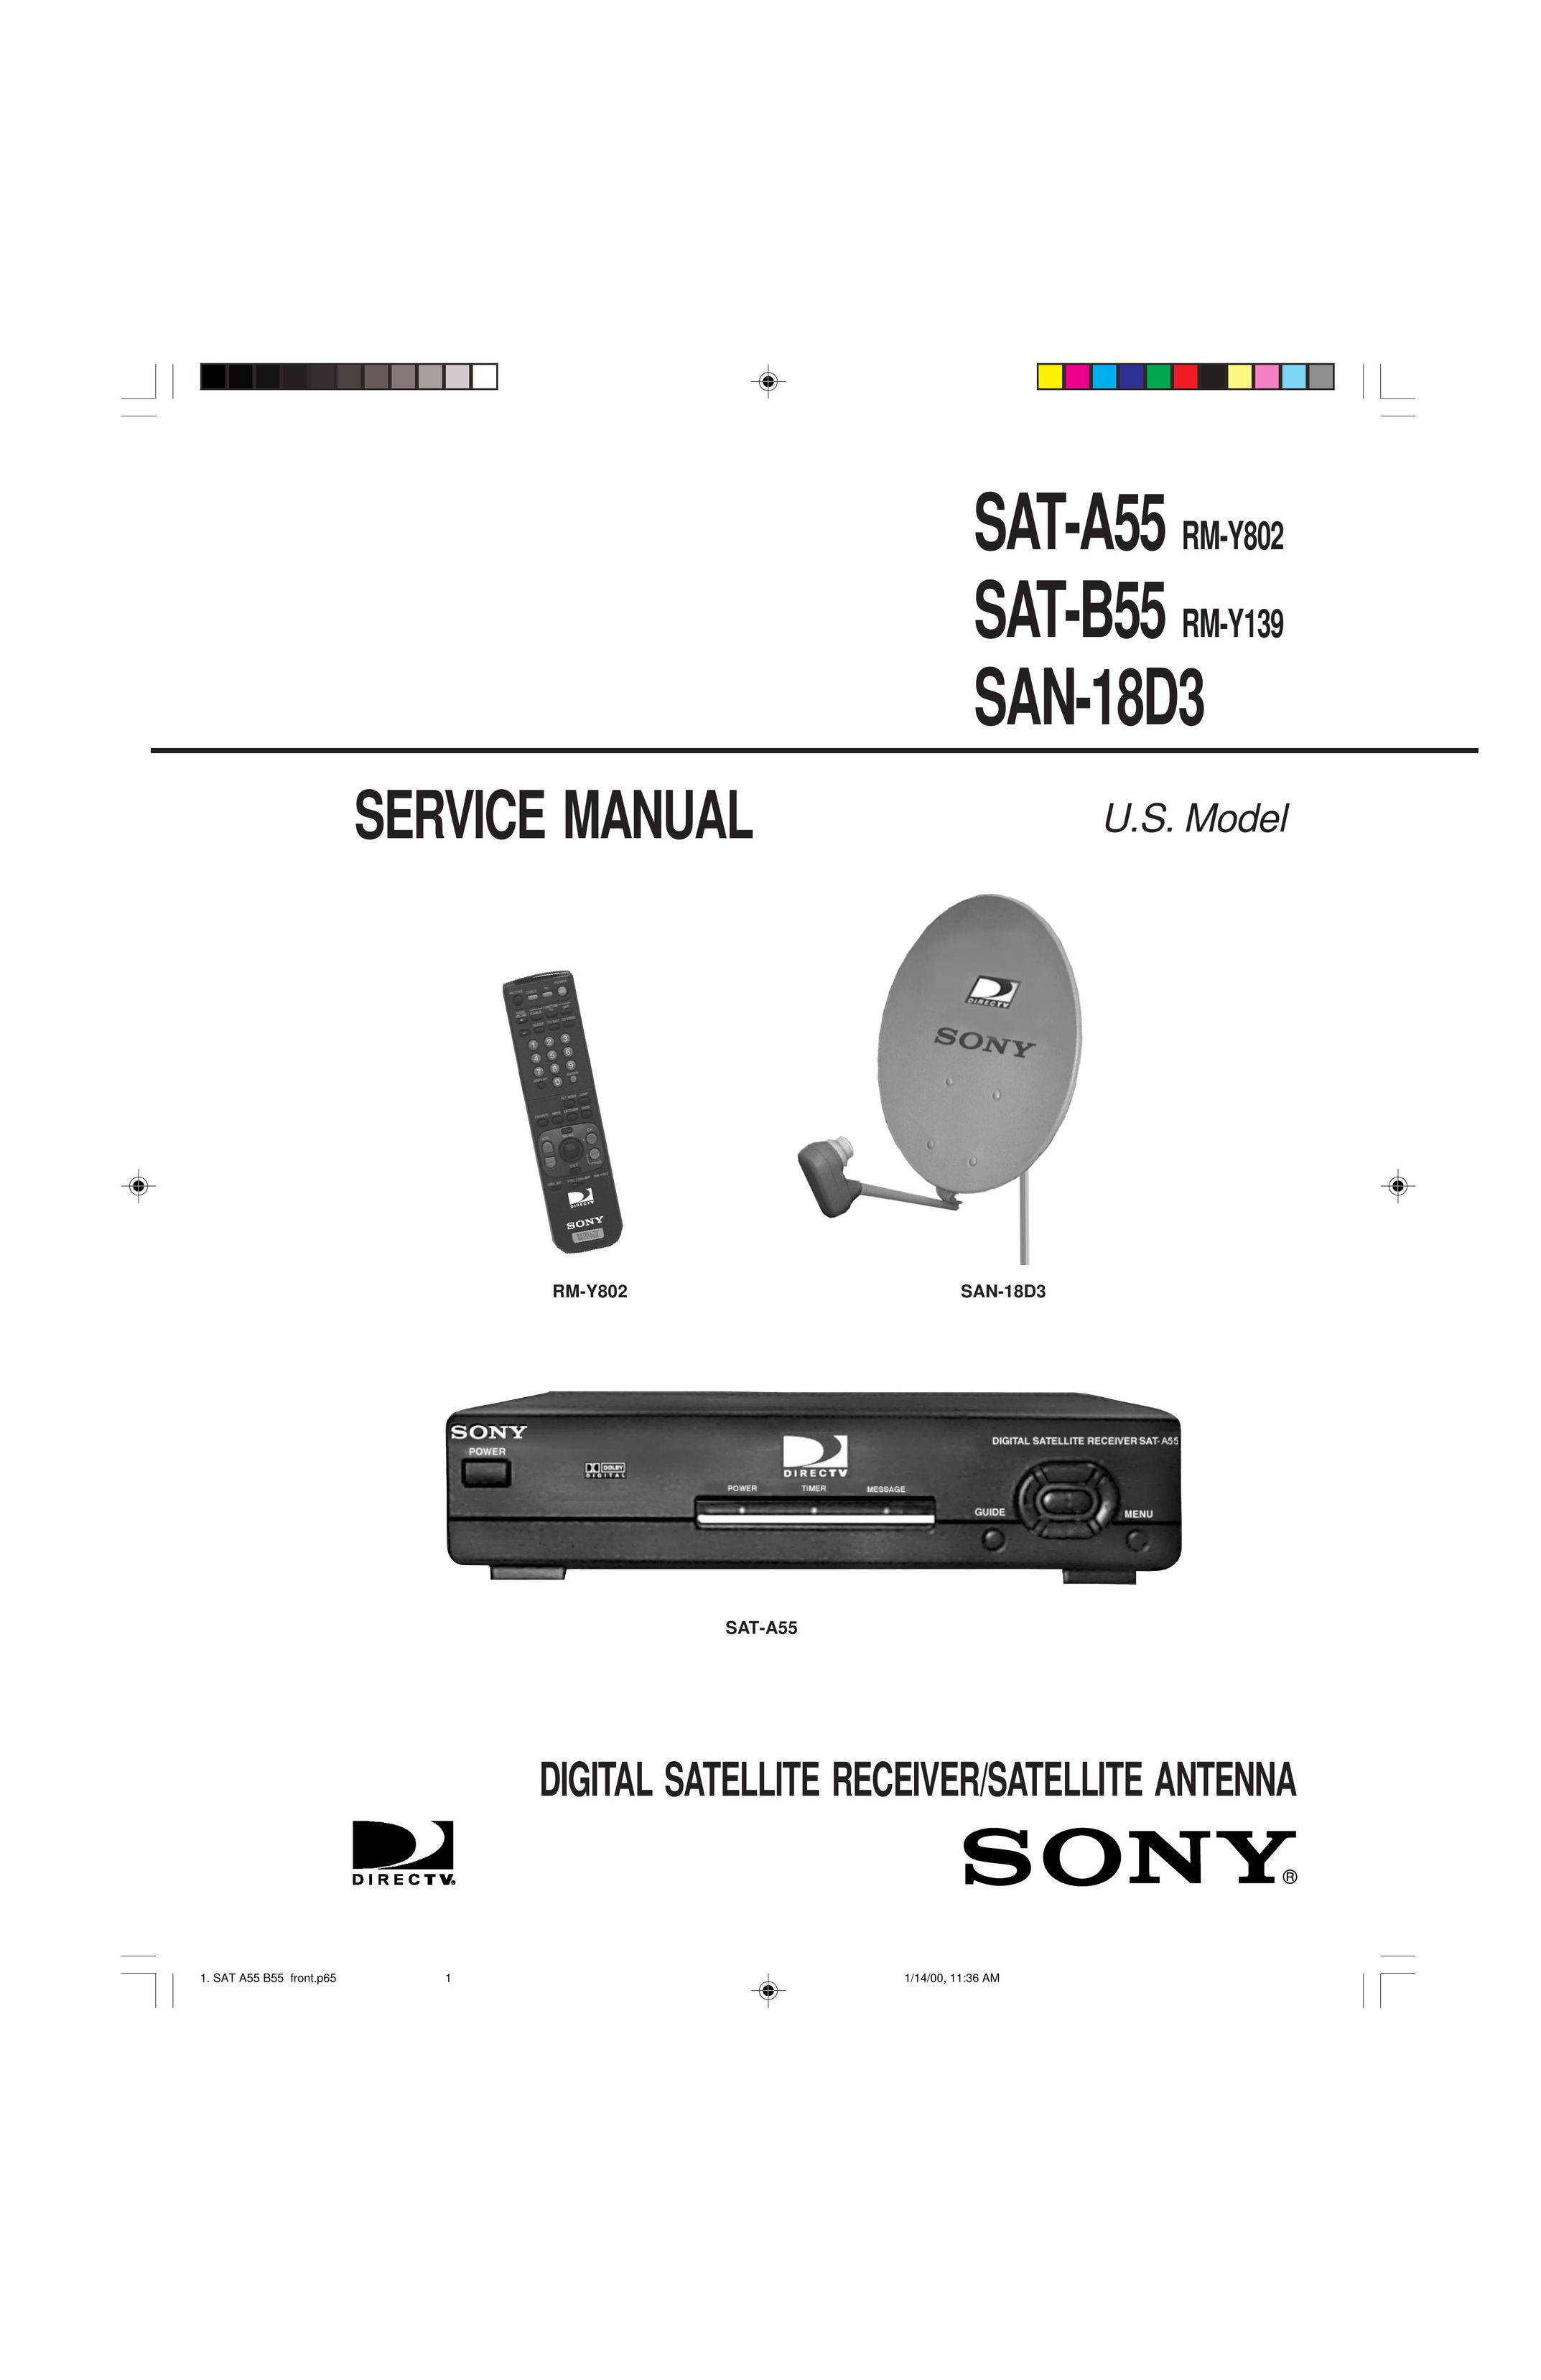 Sony SAT-B55 RM-Y139 Satellite TV System User Manual